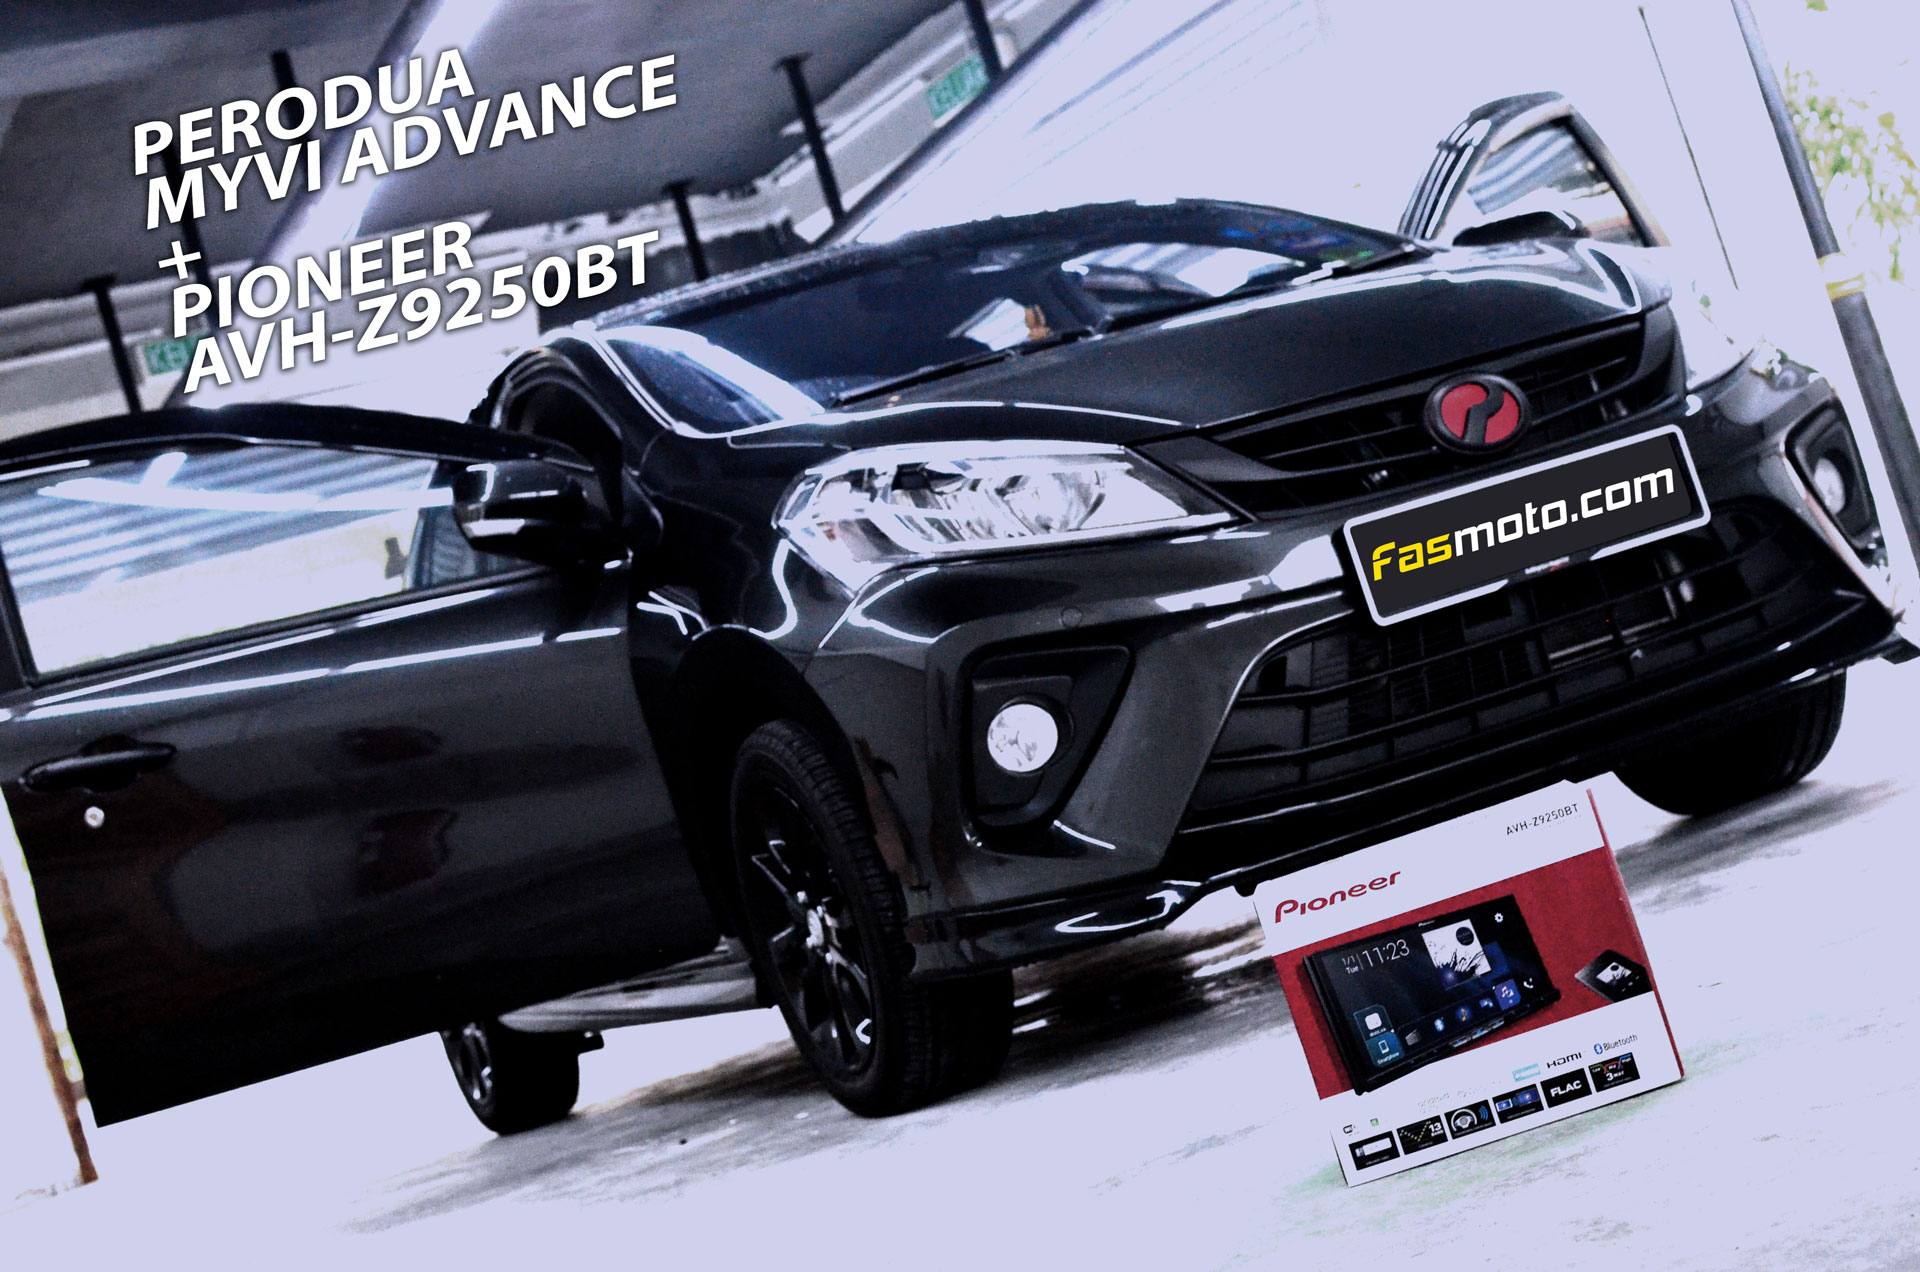 Cover Photo of the Perodua Myvi Pioneer AVH-Z9250BT install